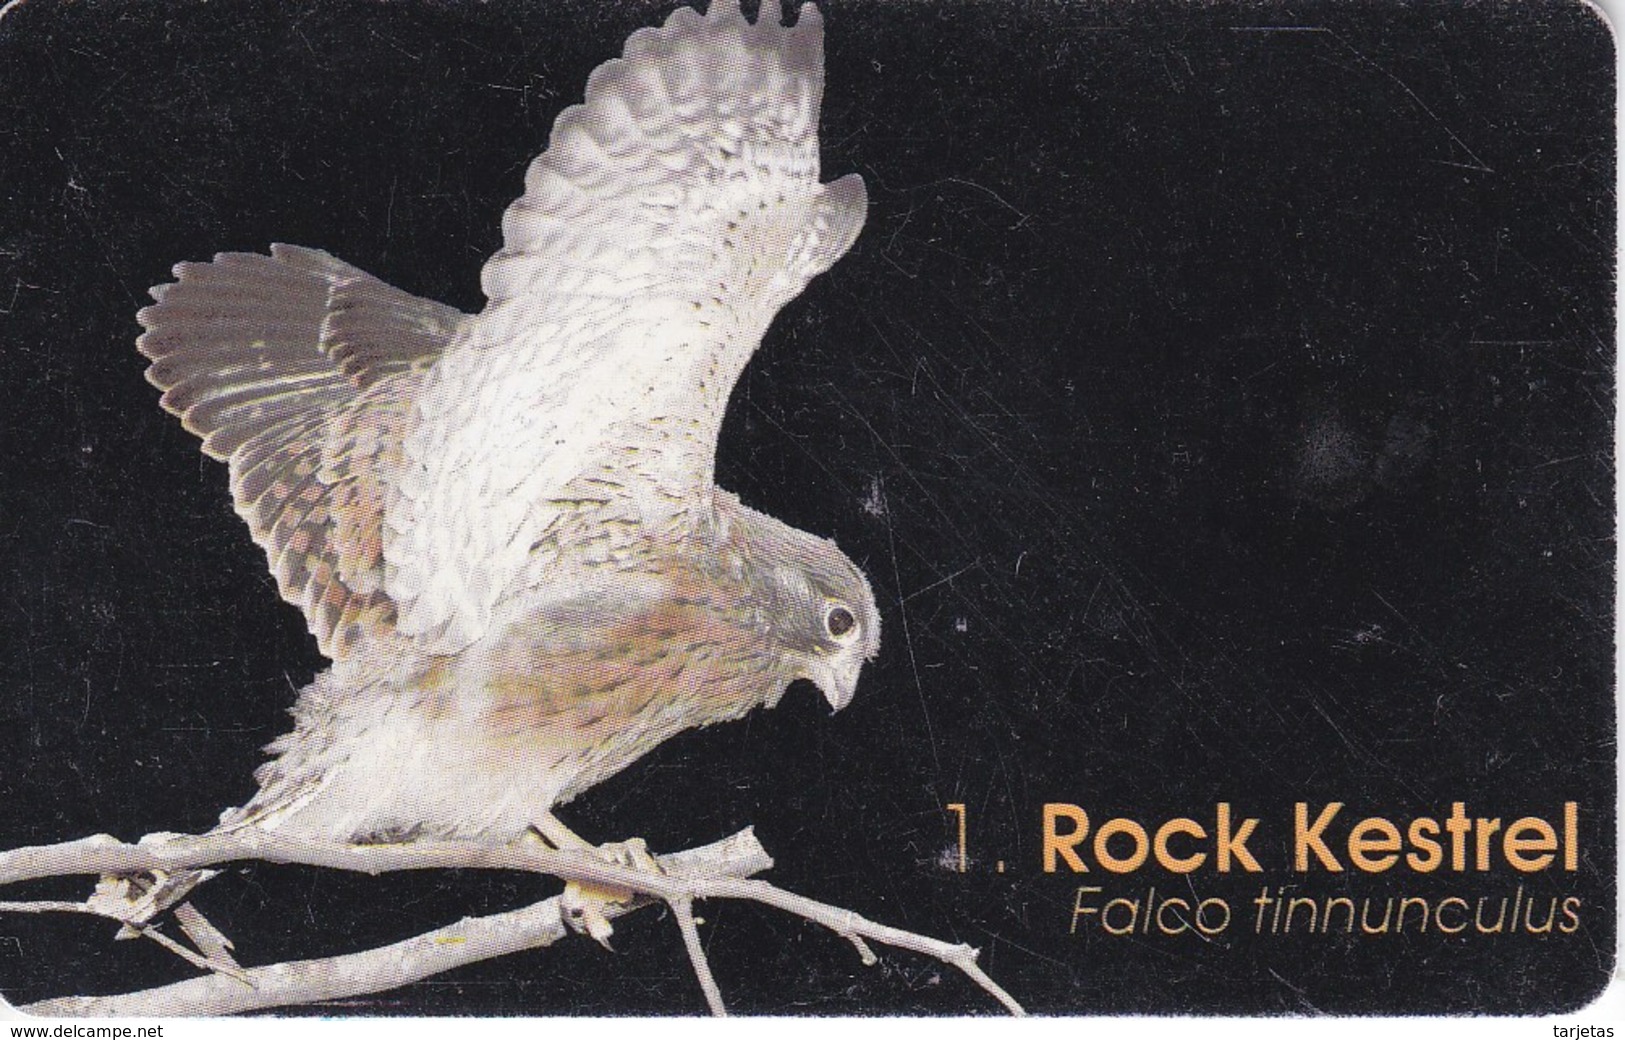 TARJETA DE NAMIBIA DE UN ROCK KESTREL  (BIRD-PAJARO) CERNICALO - Águilas & Aves De Presa